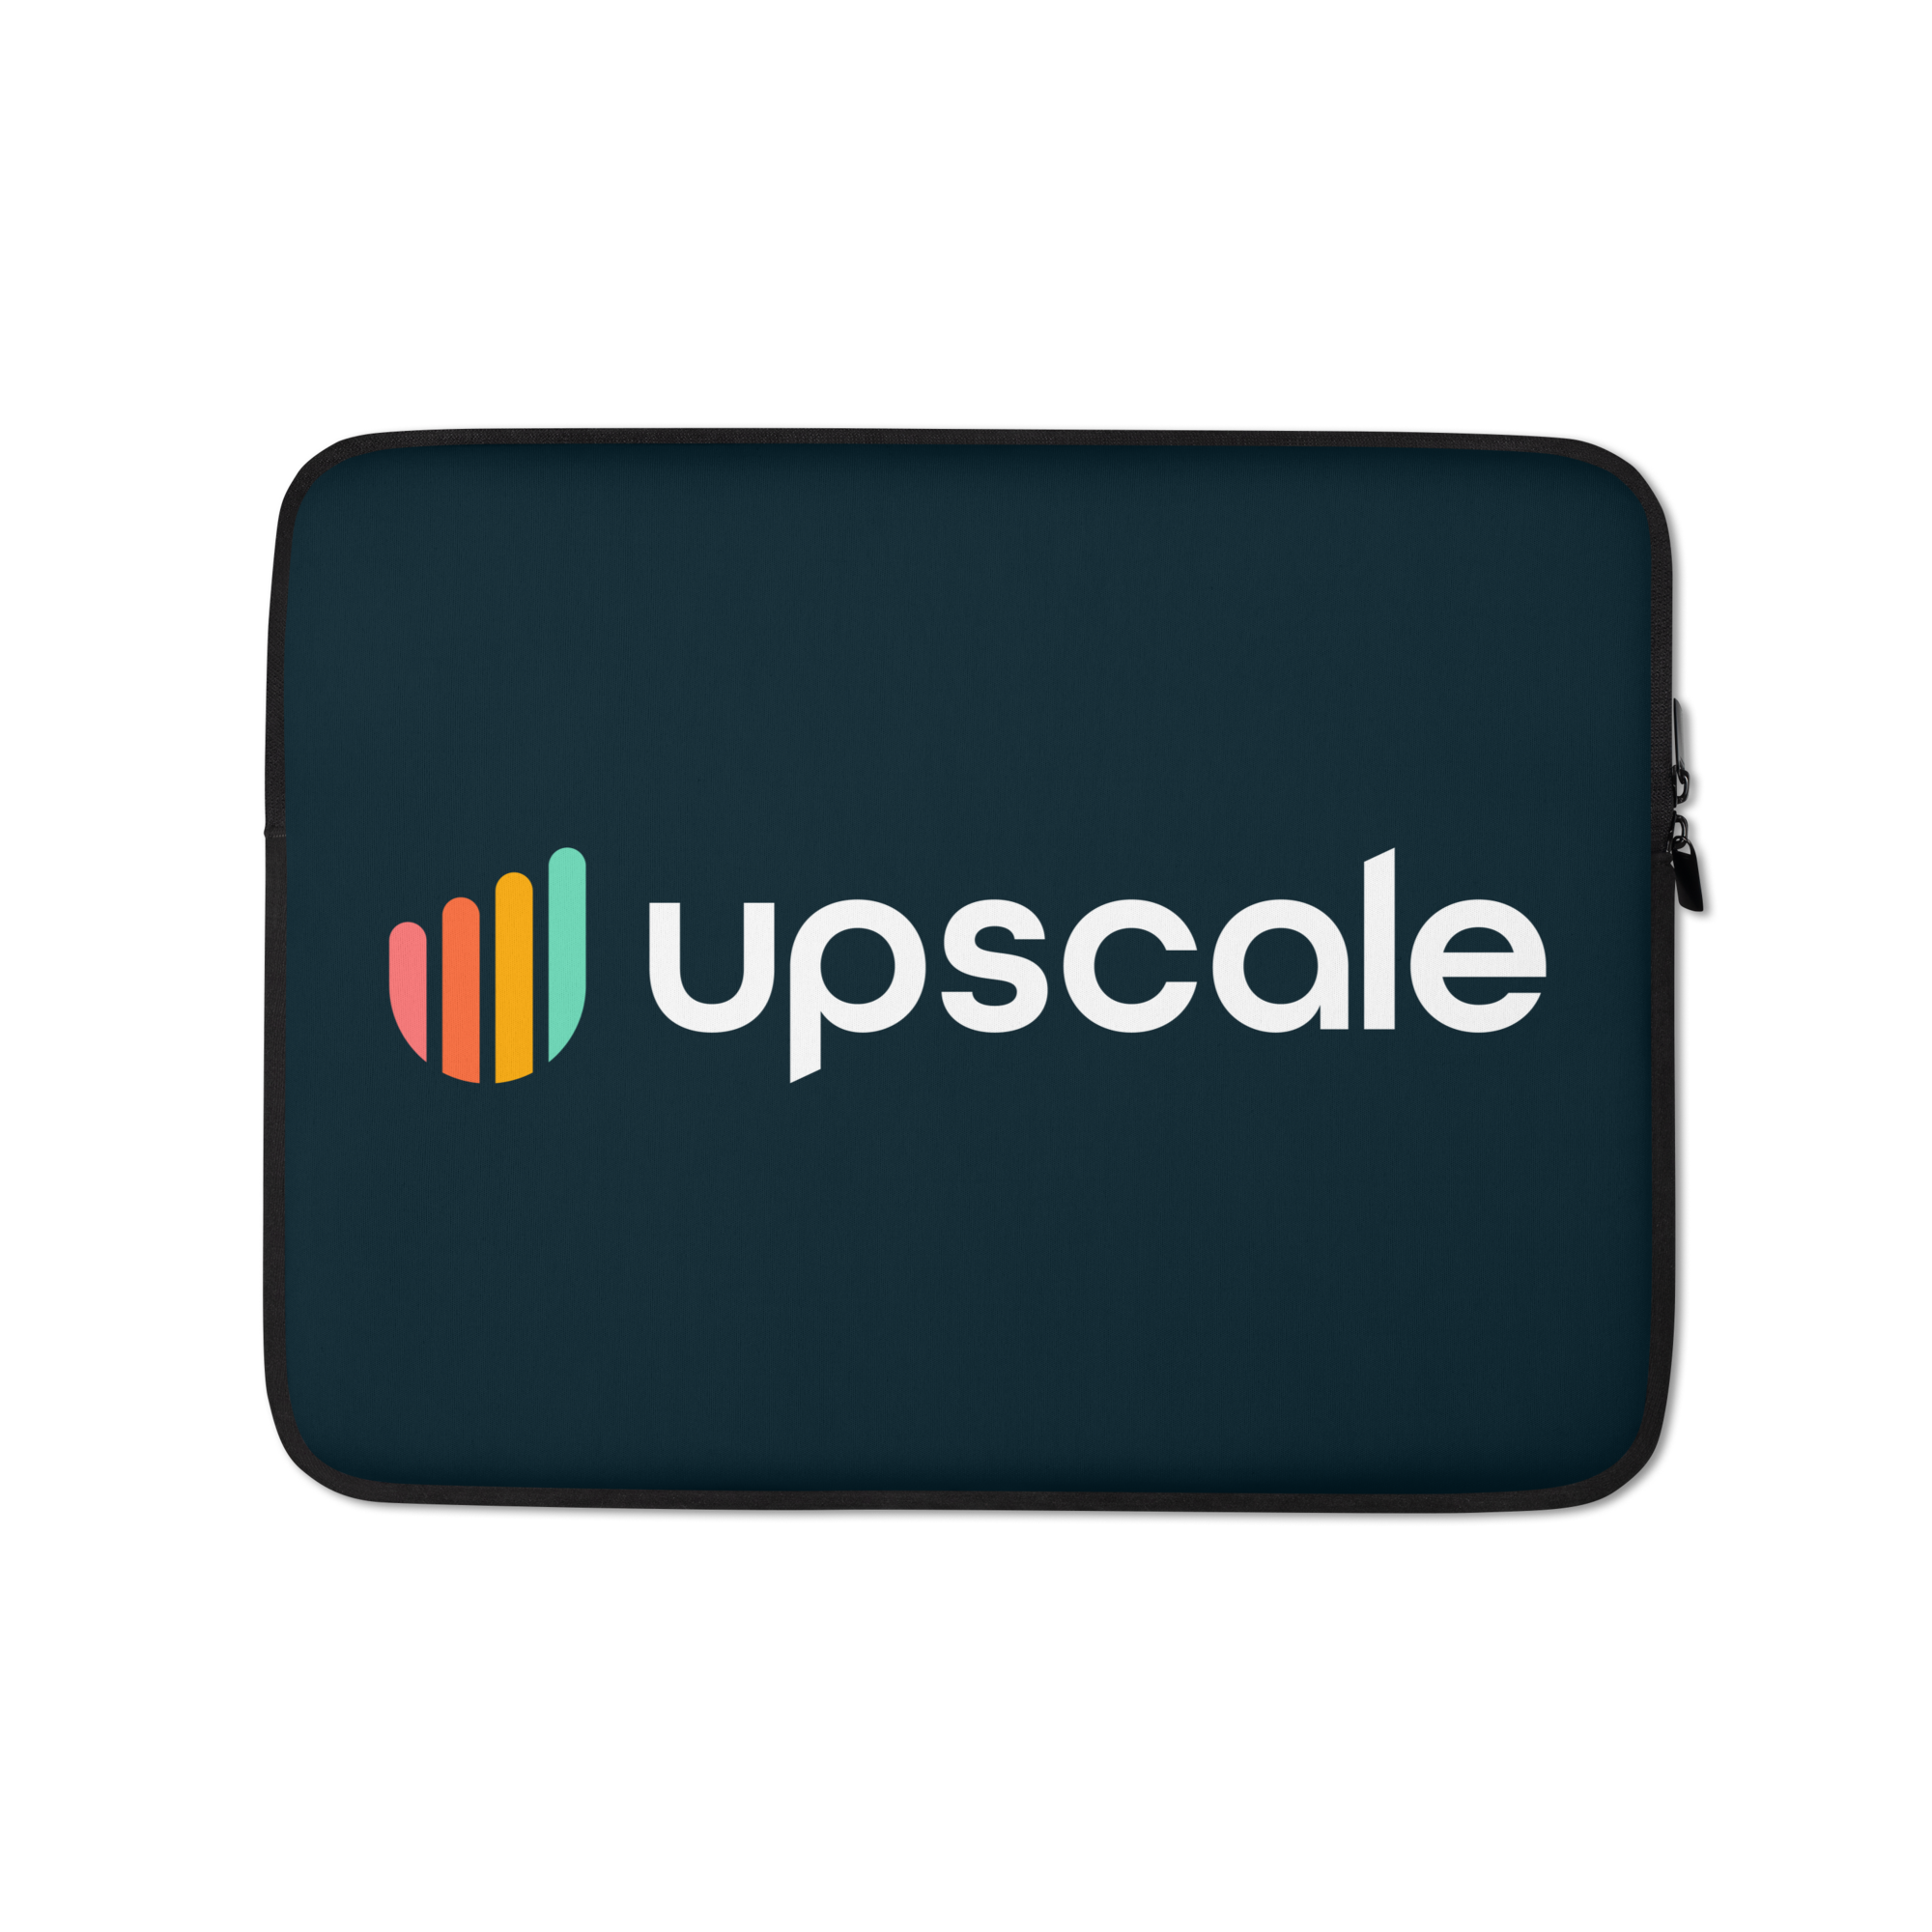 Upscale - Laptop Sleeve